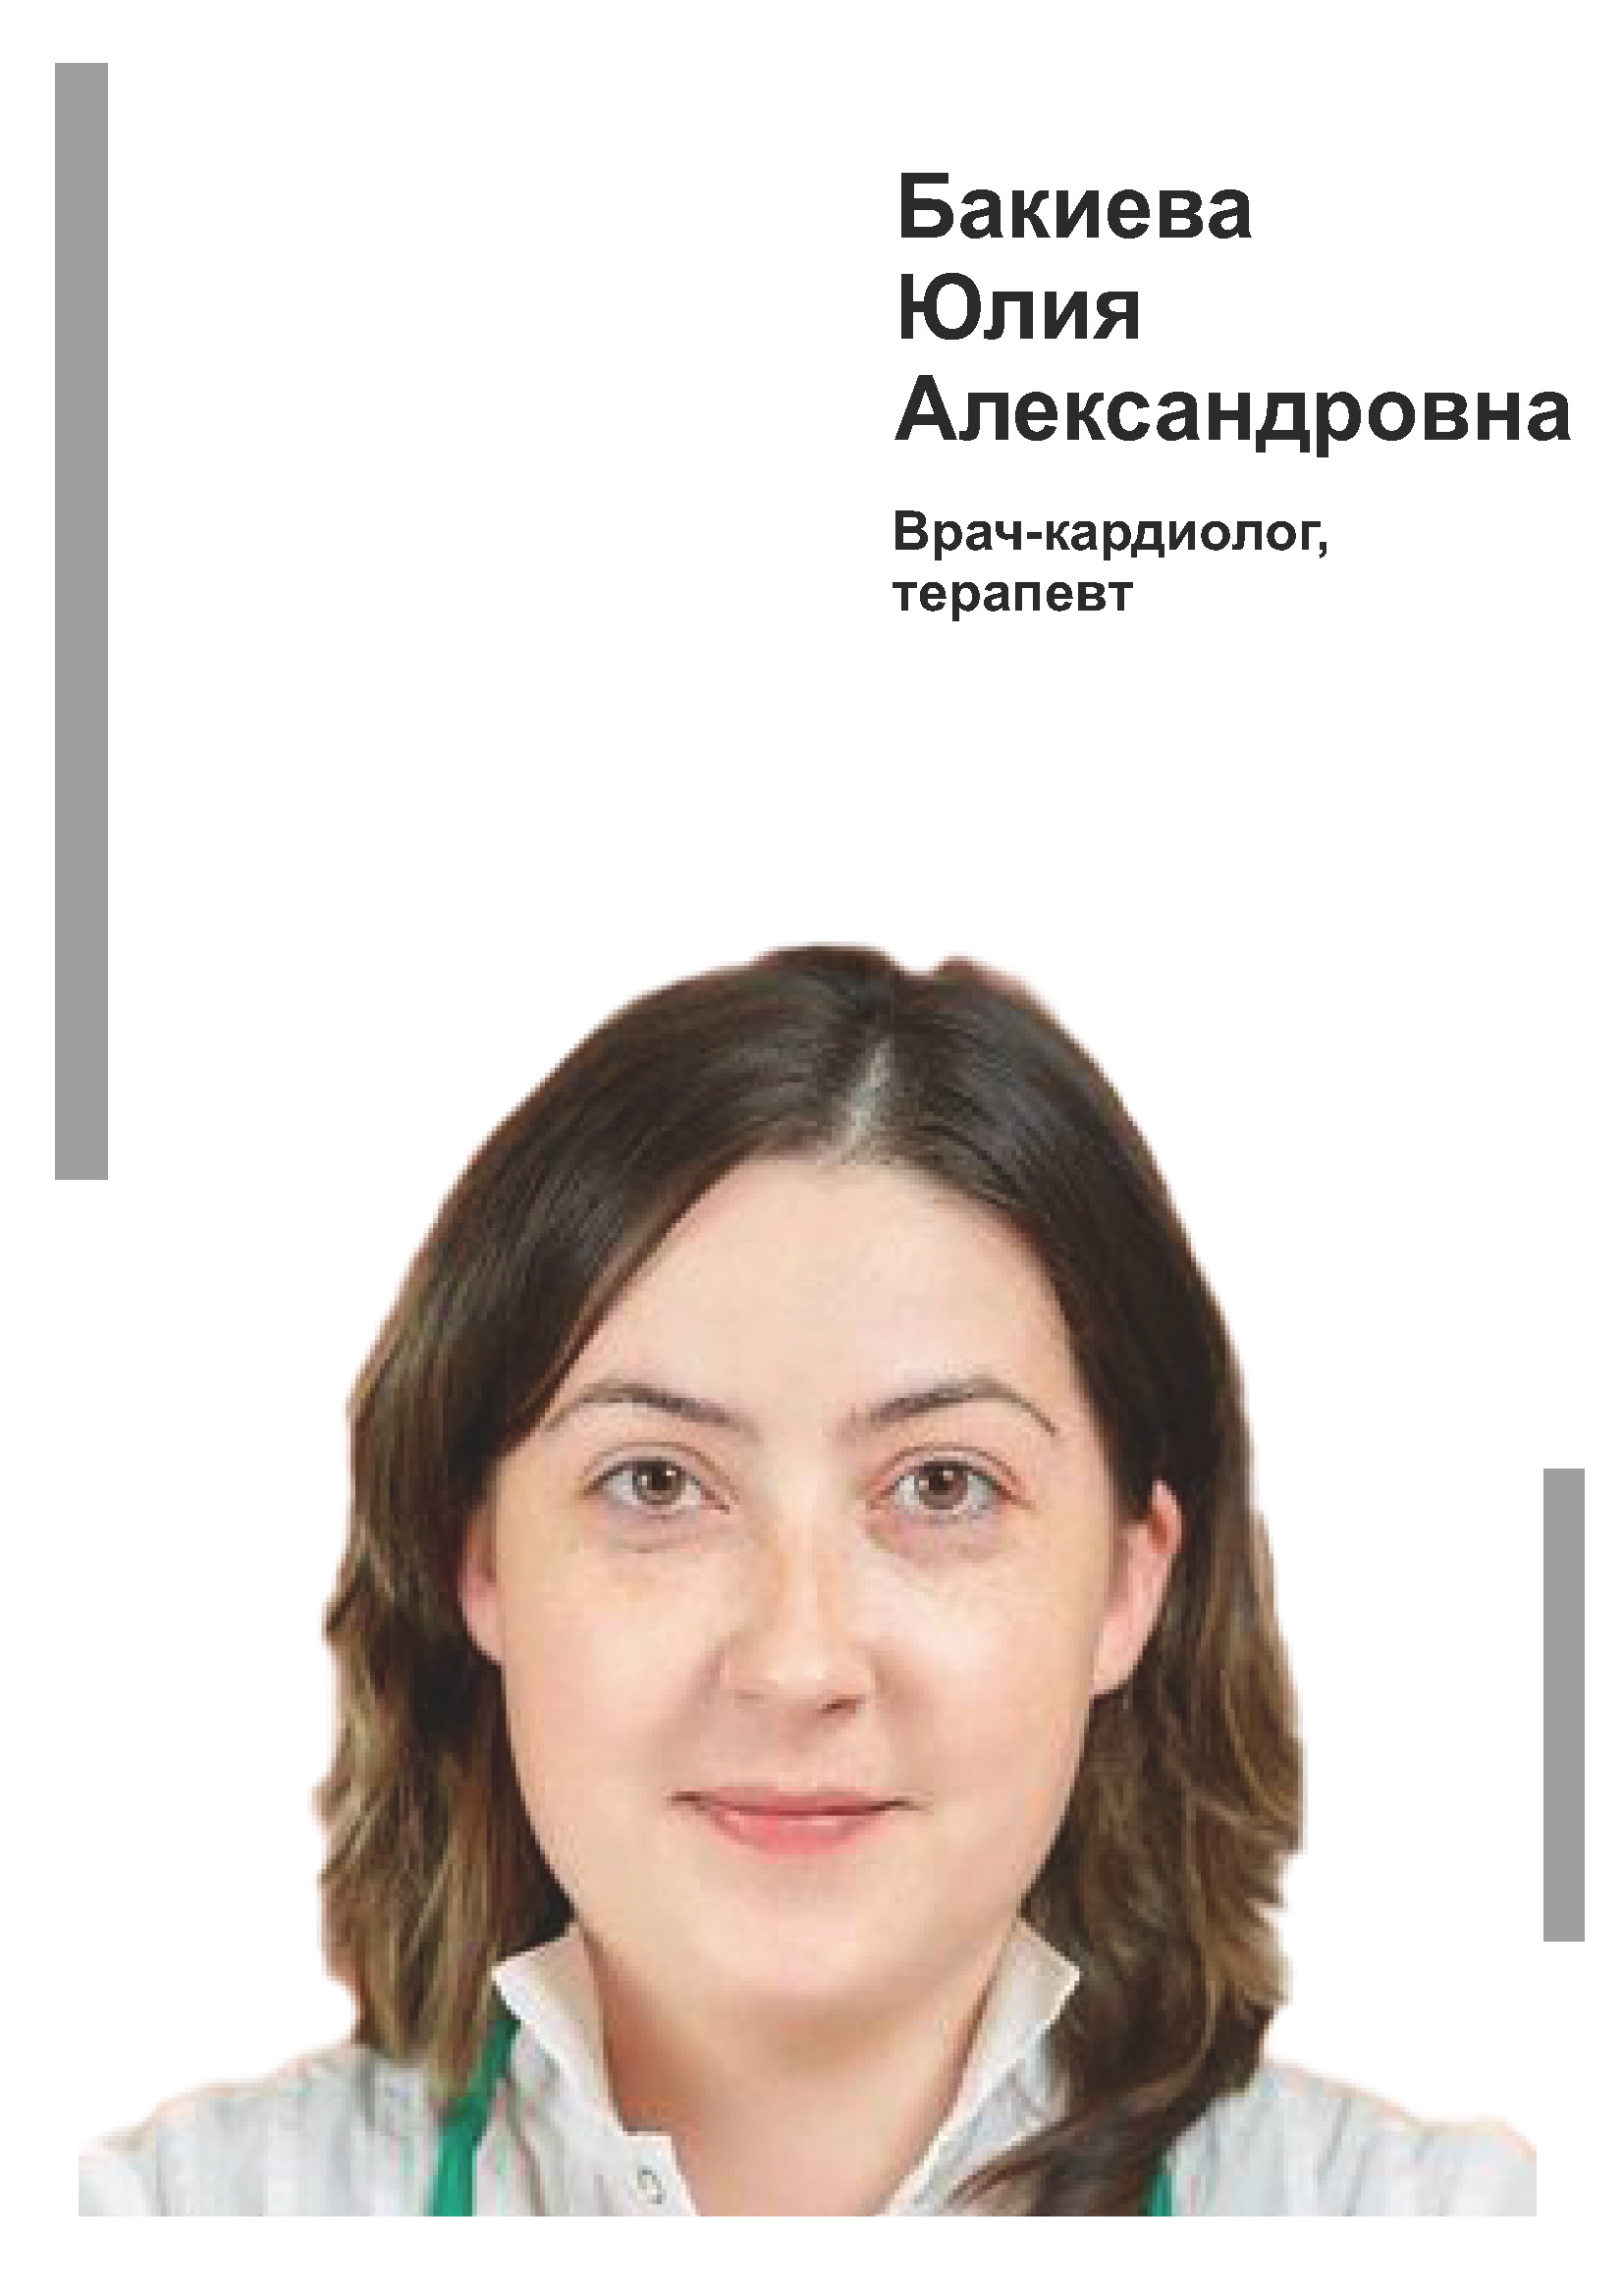 Бакиева Юлия Александрова - кардиолог, терапев в клинике Lezaffe г. Югорск